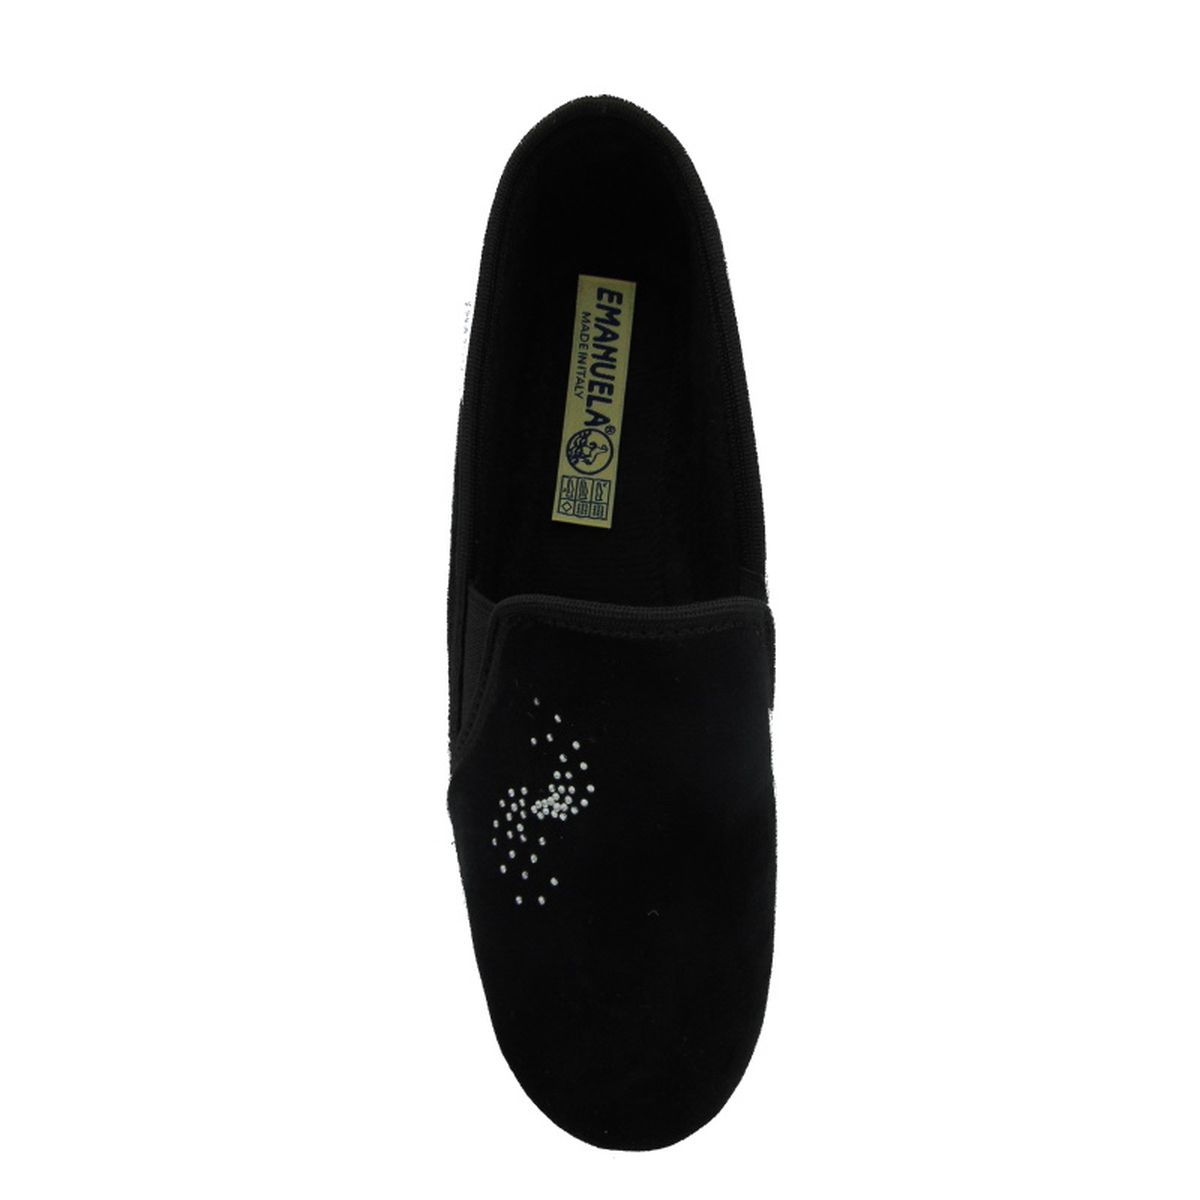 Pantofola Donna con elastici Emanuela articolo 815 colore nero algarve.